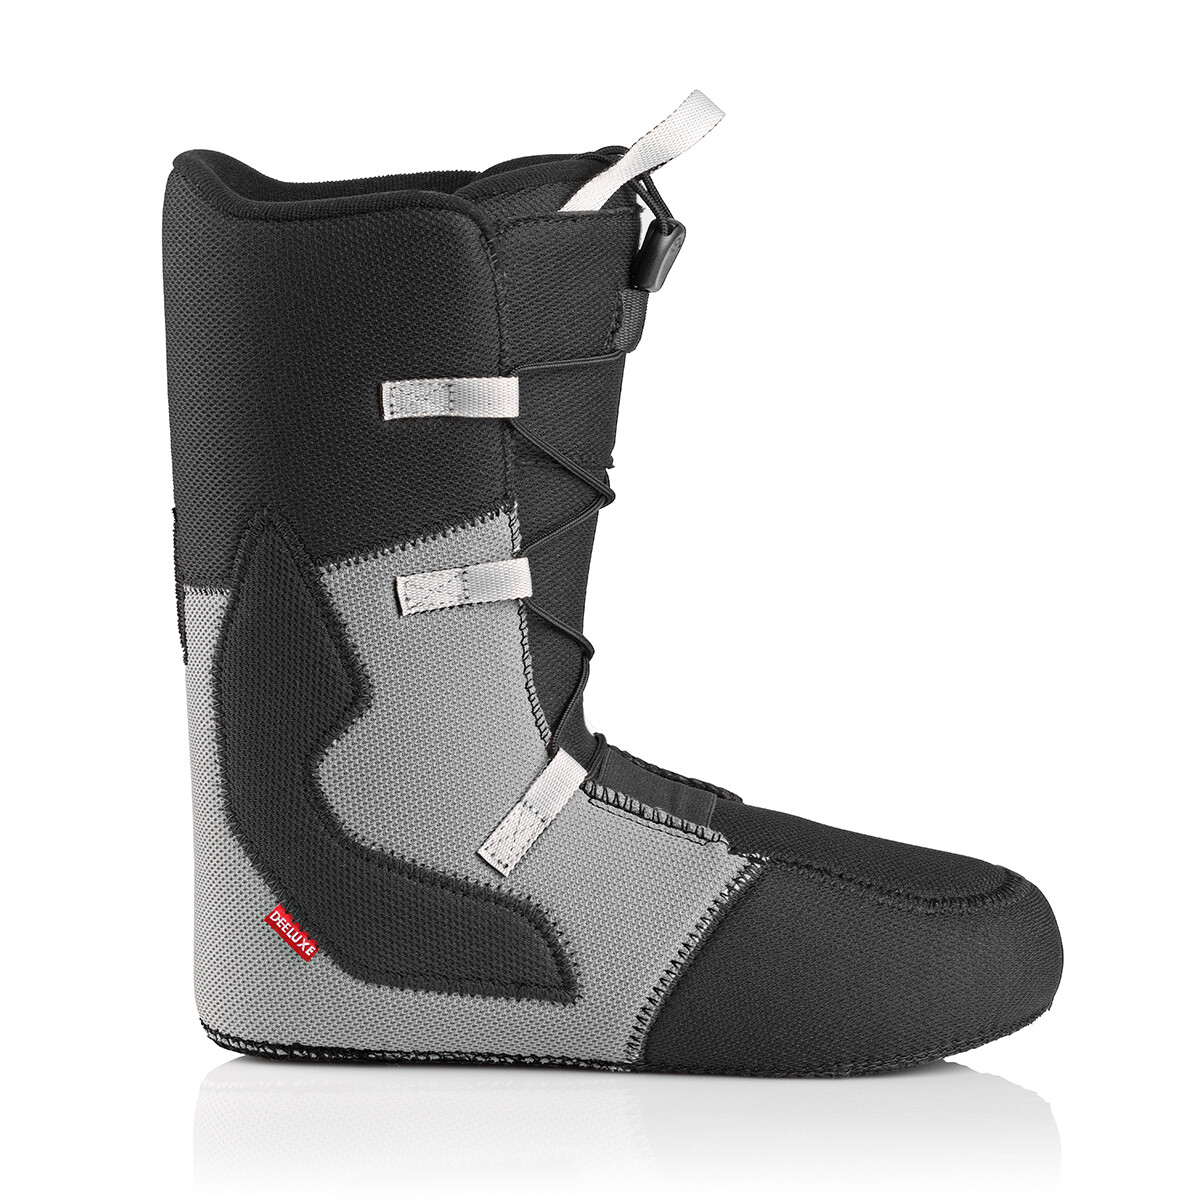 Deeluxe DNA Team White Snowboard Boots